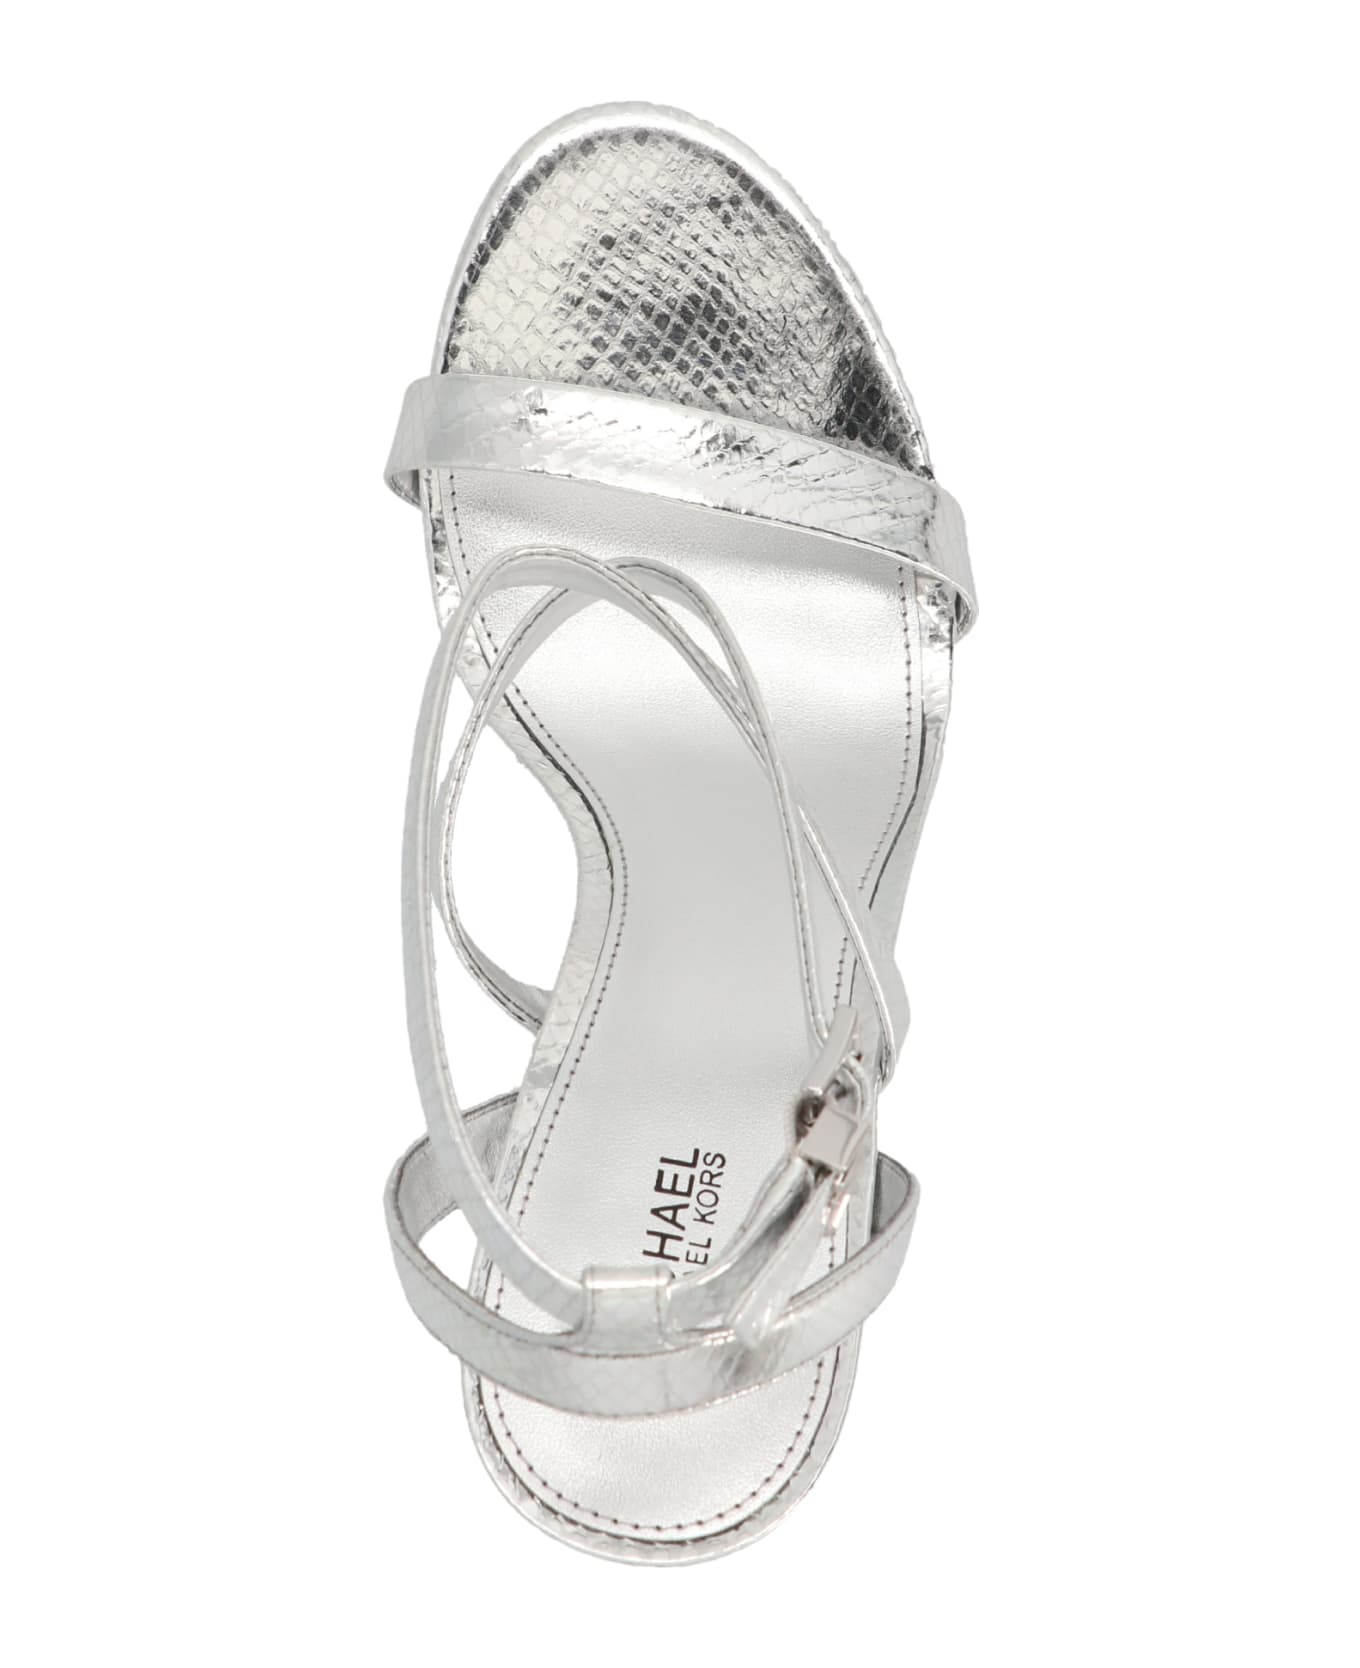 Michael Kors Asha Heeled Leather Sandals - Silver